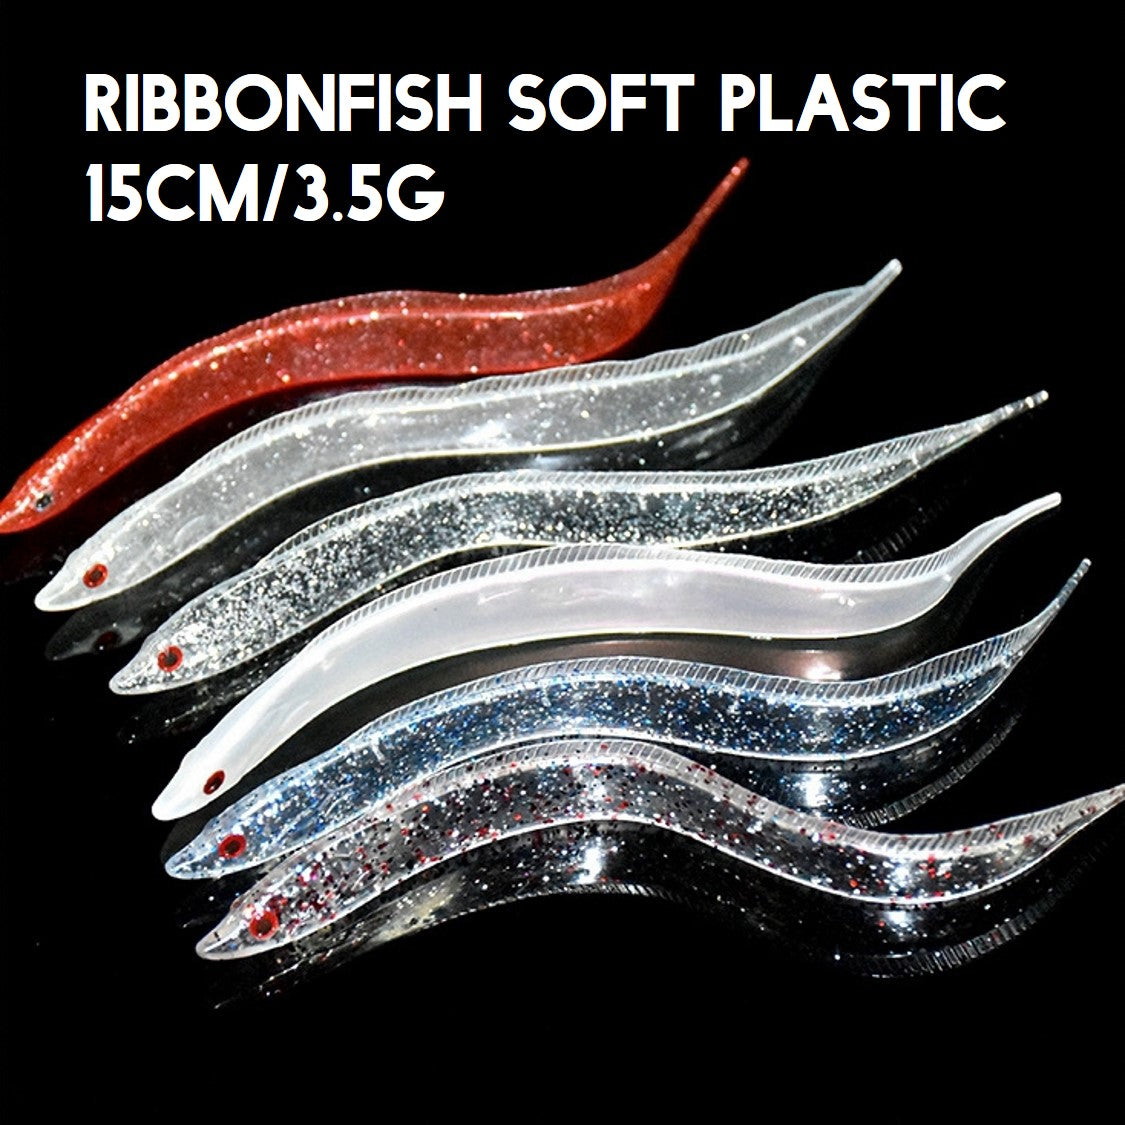 Ribbonfish soft plastic